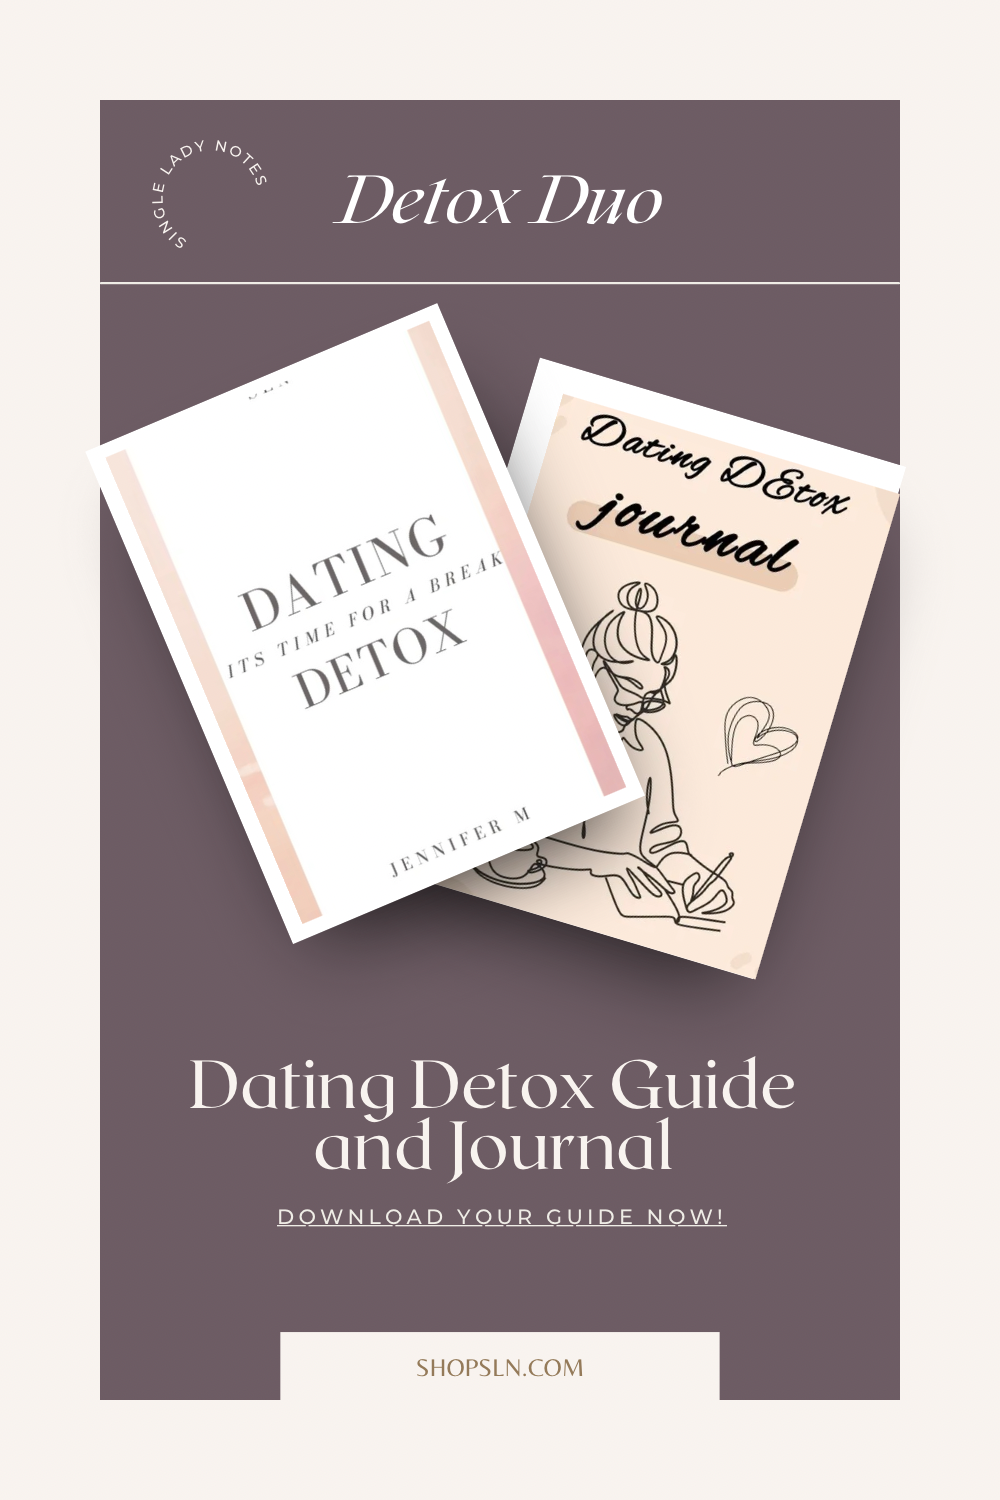 Dating Detox Duo